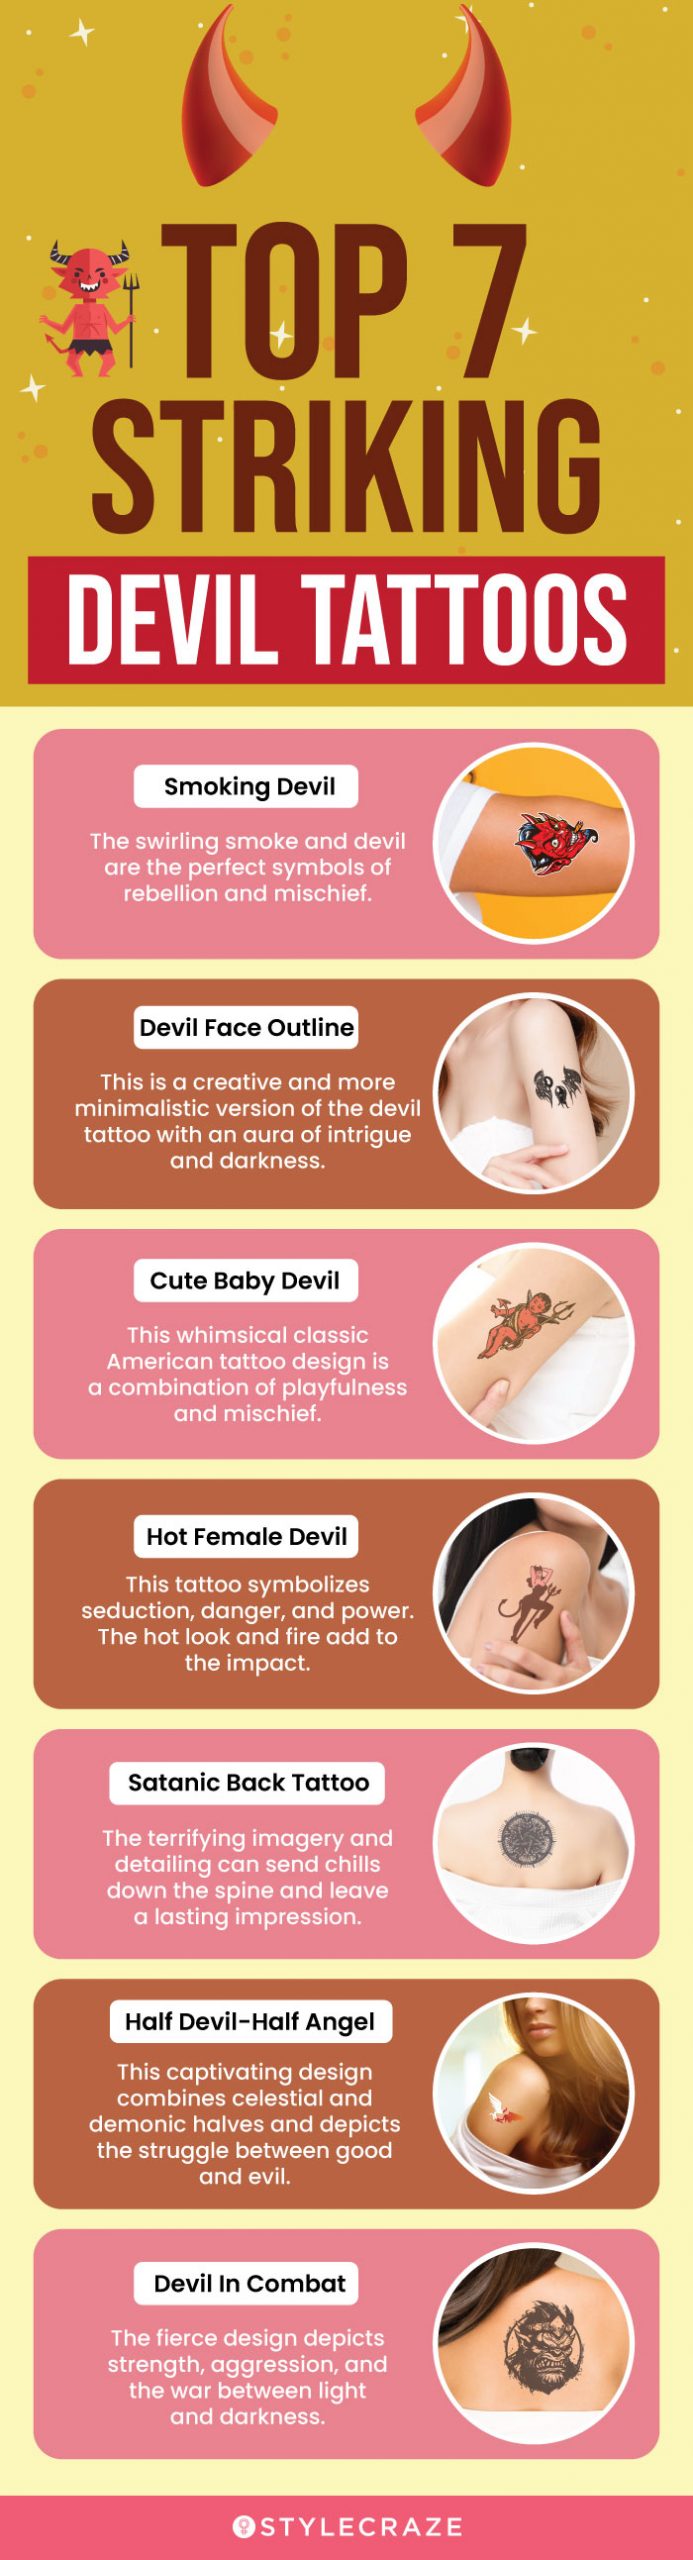 top 7 striking devil tattoos (infographic)